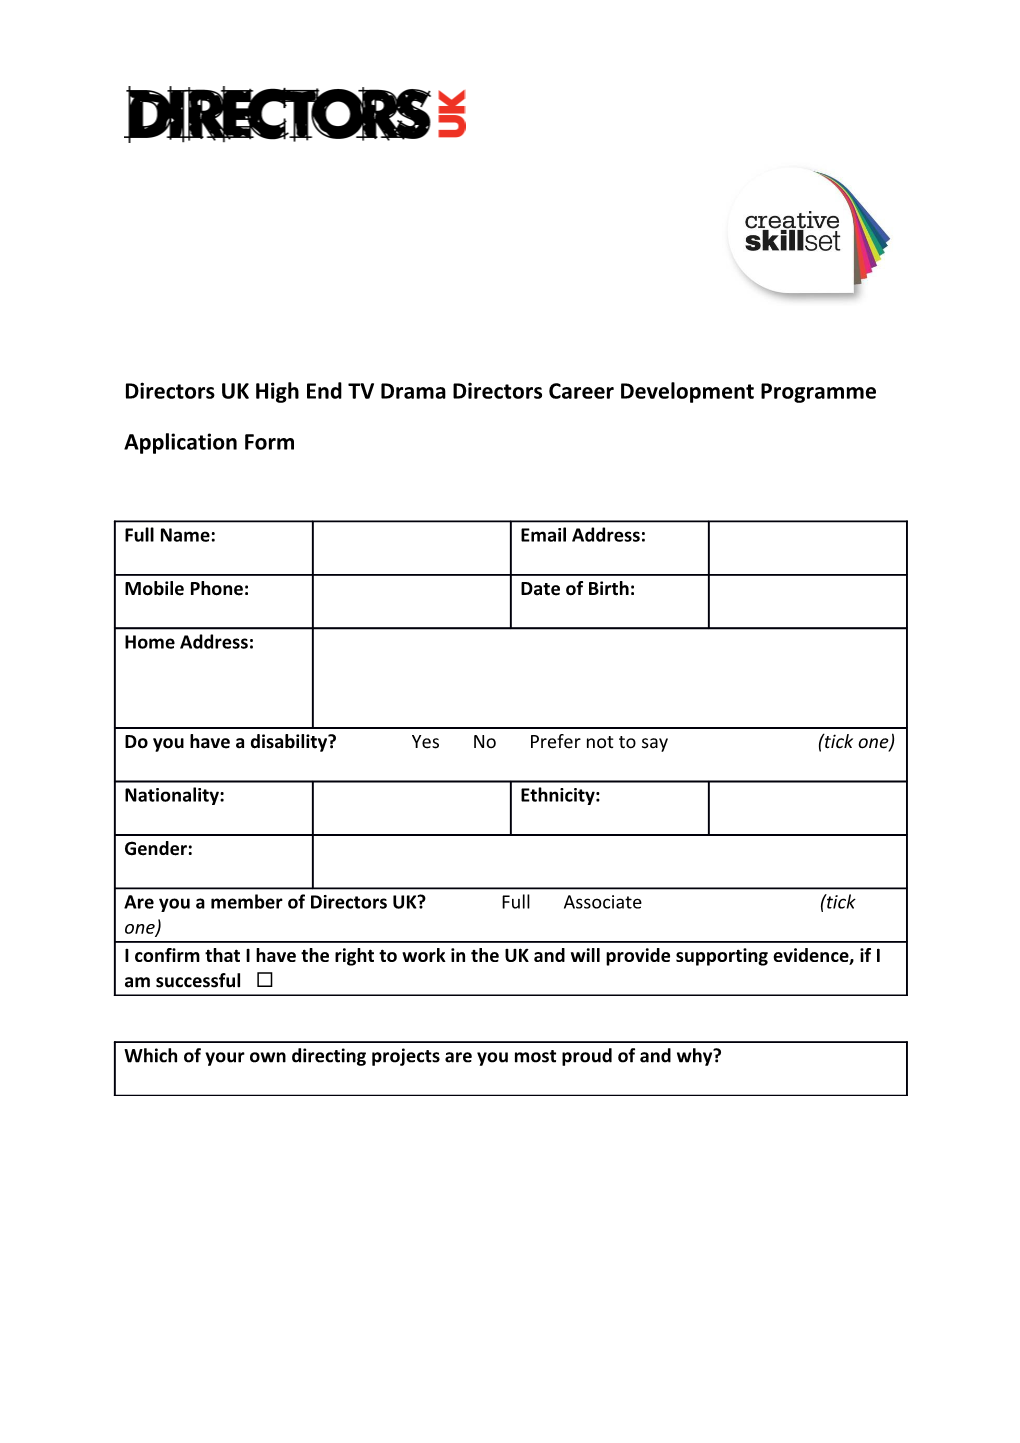 Directors UK High End TV Drama Directors Career Development Programme Application Form